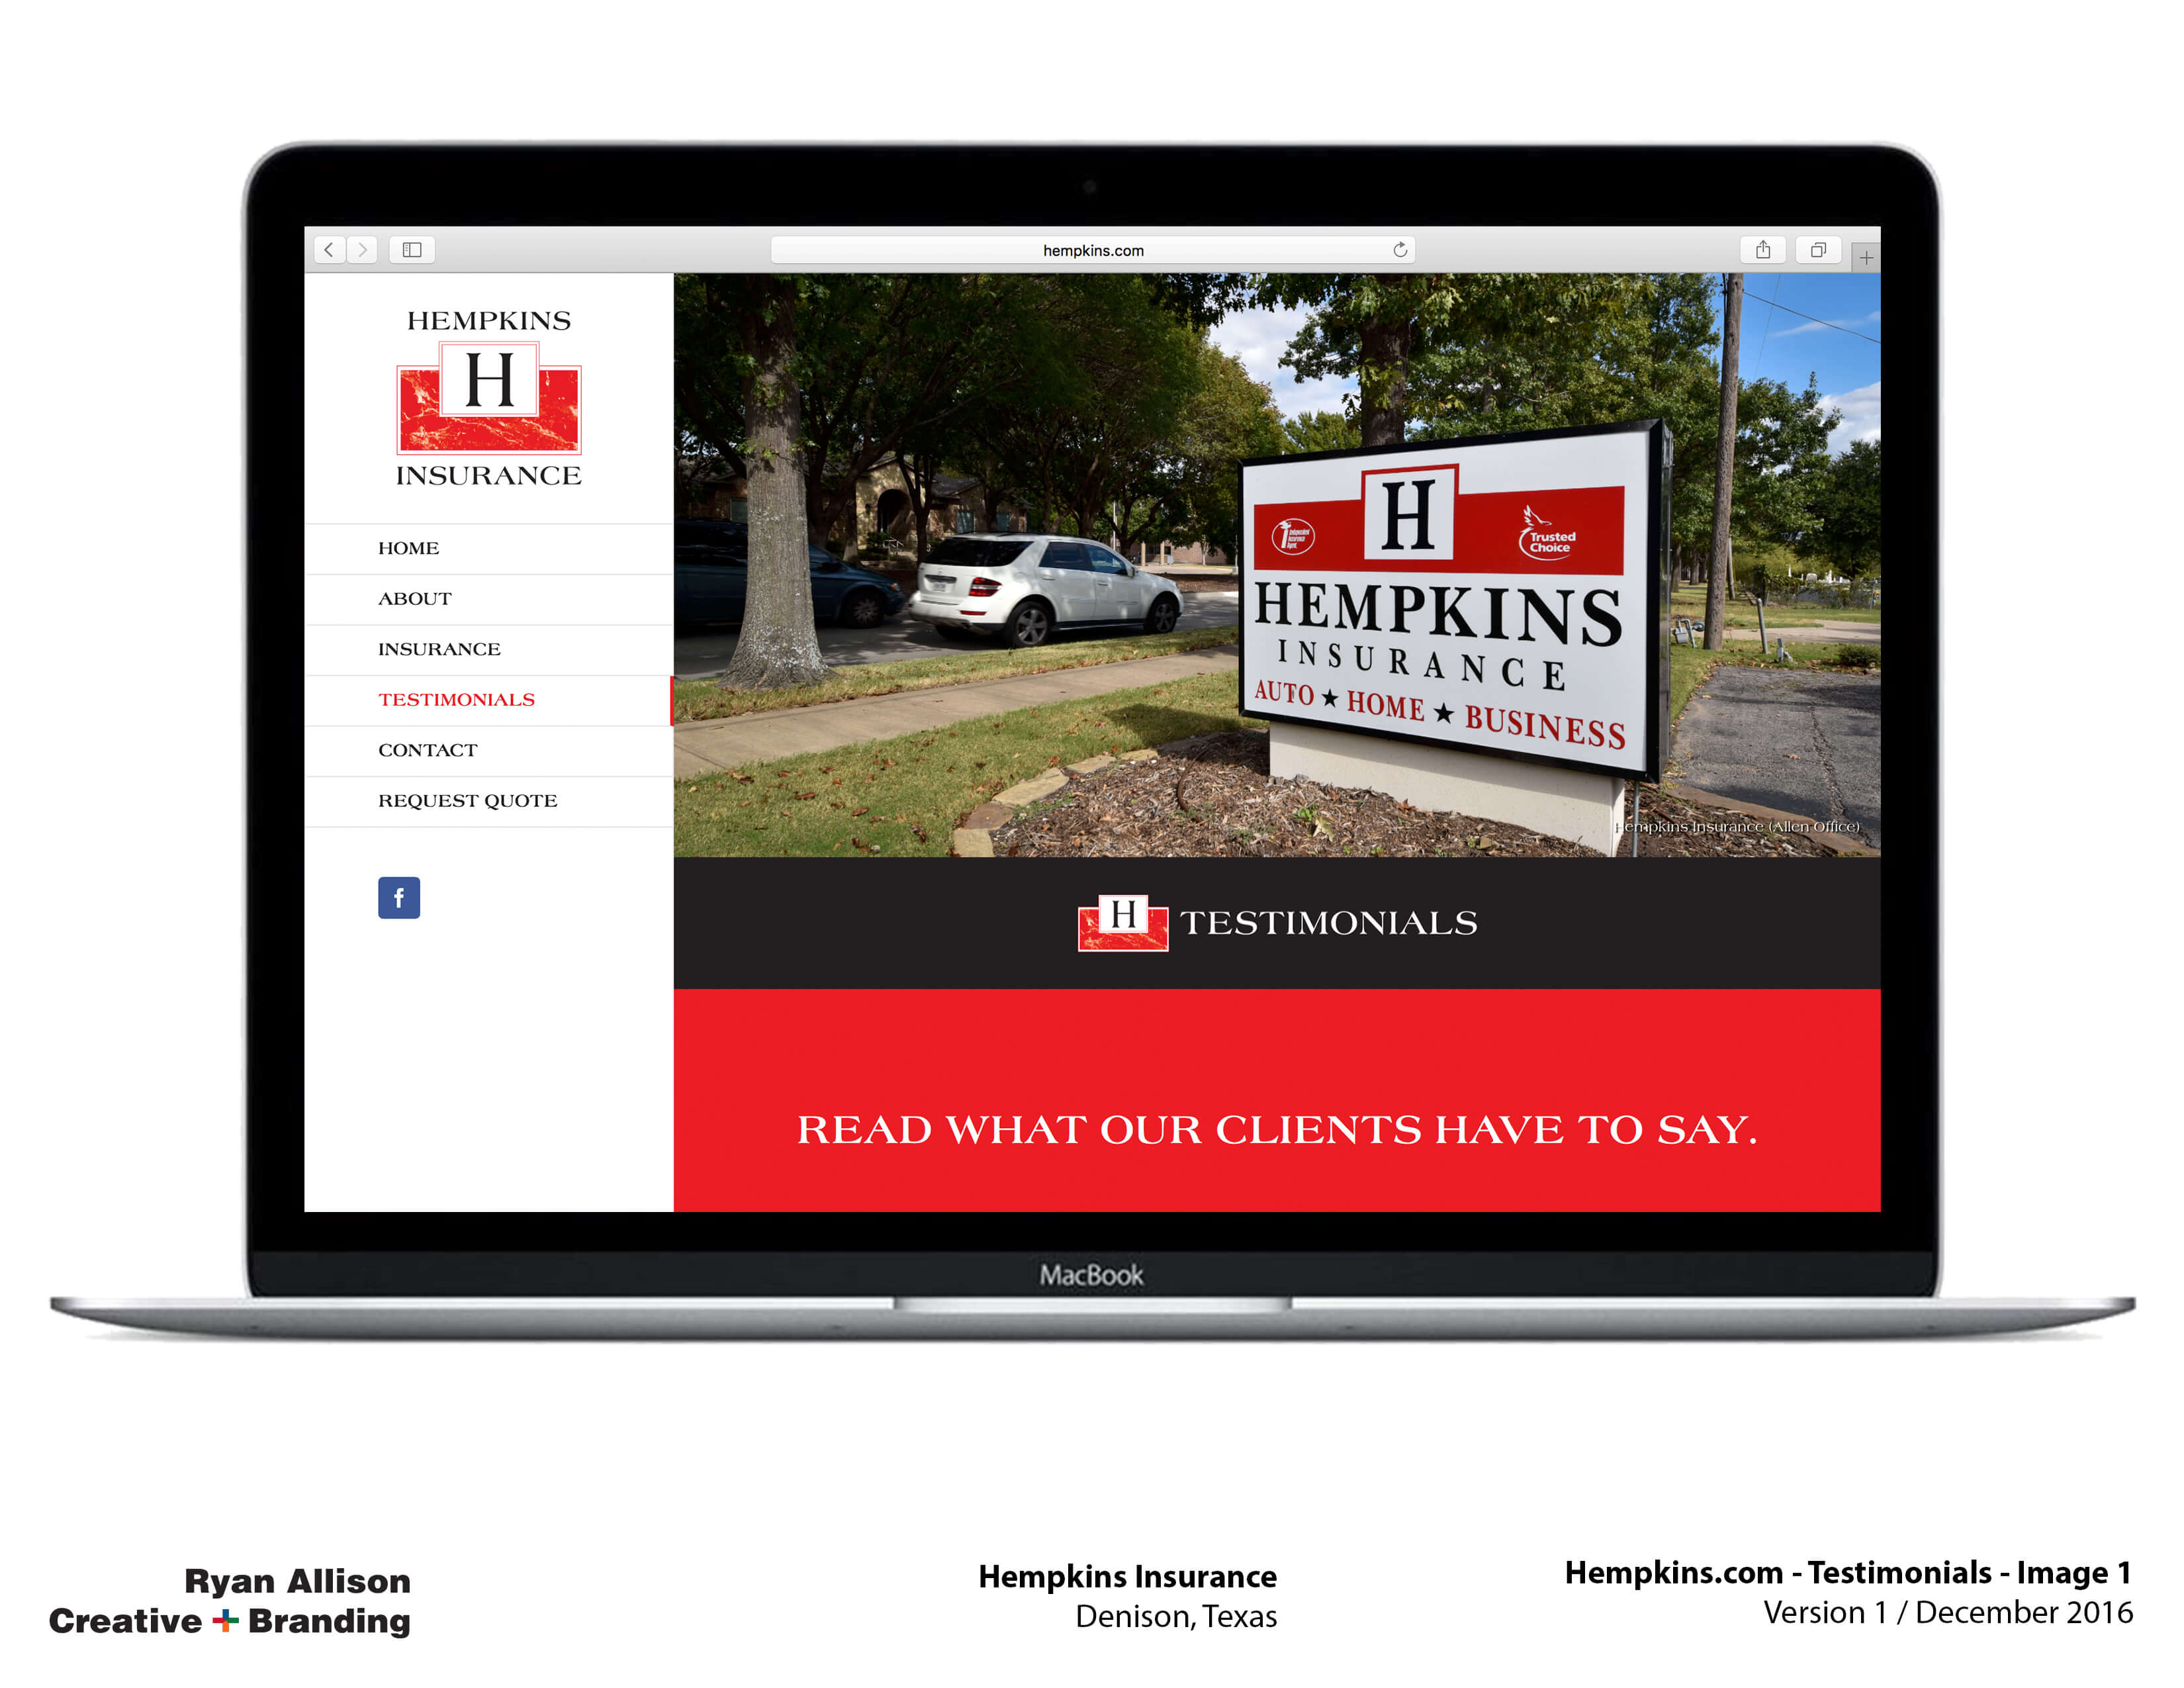 Hempkins Insurance Website Testimonials 1 - Project - Ryan Allison Creative + Branding